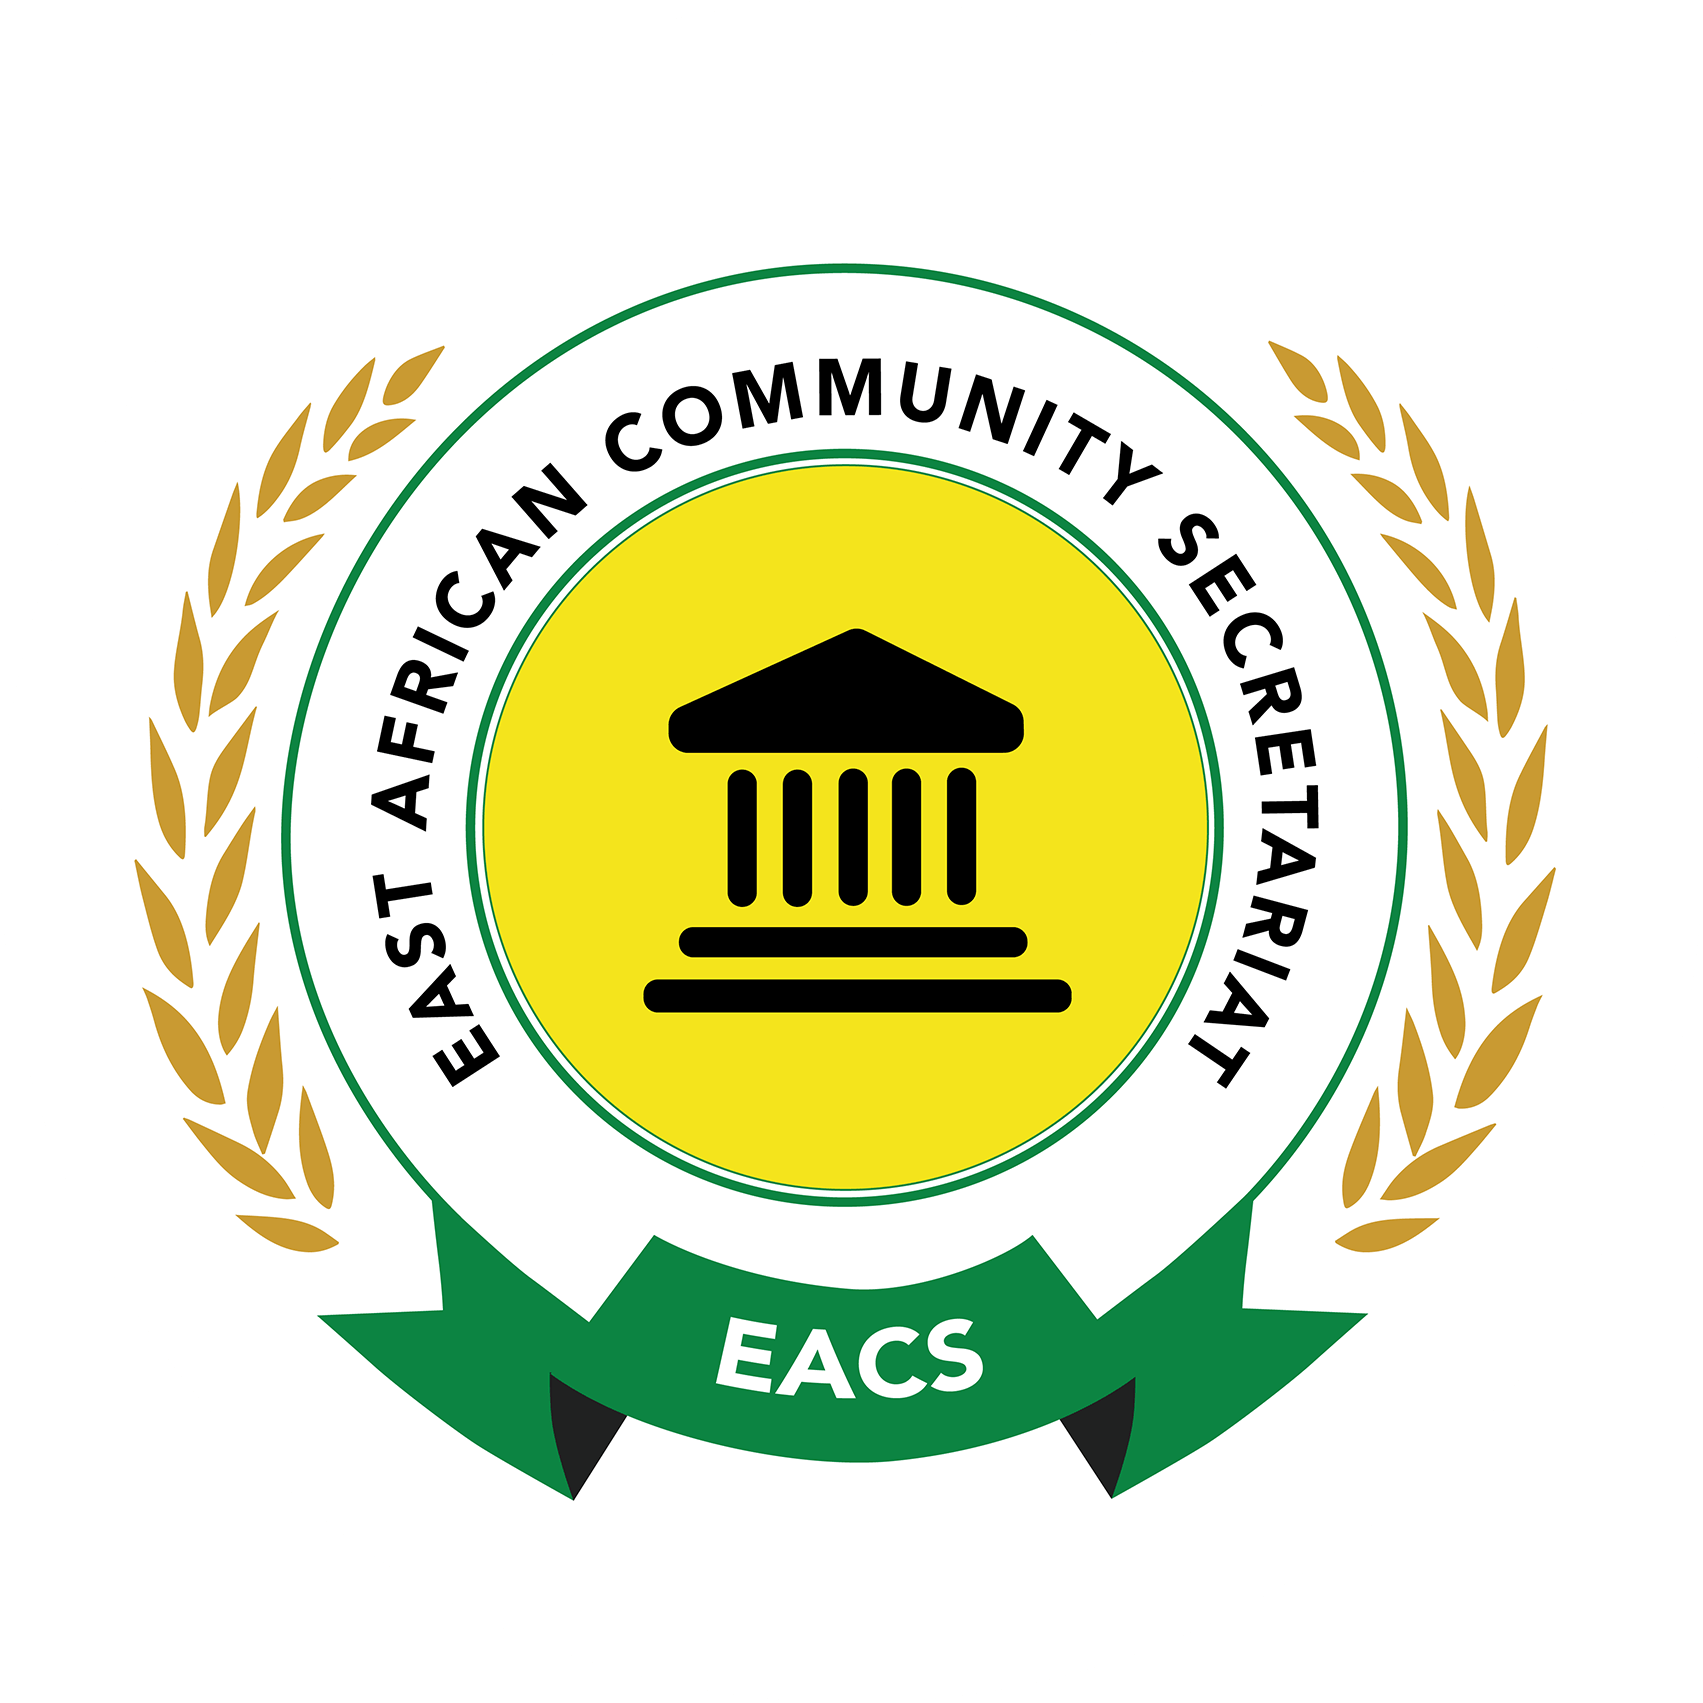 East Africa Community